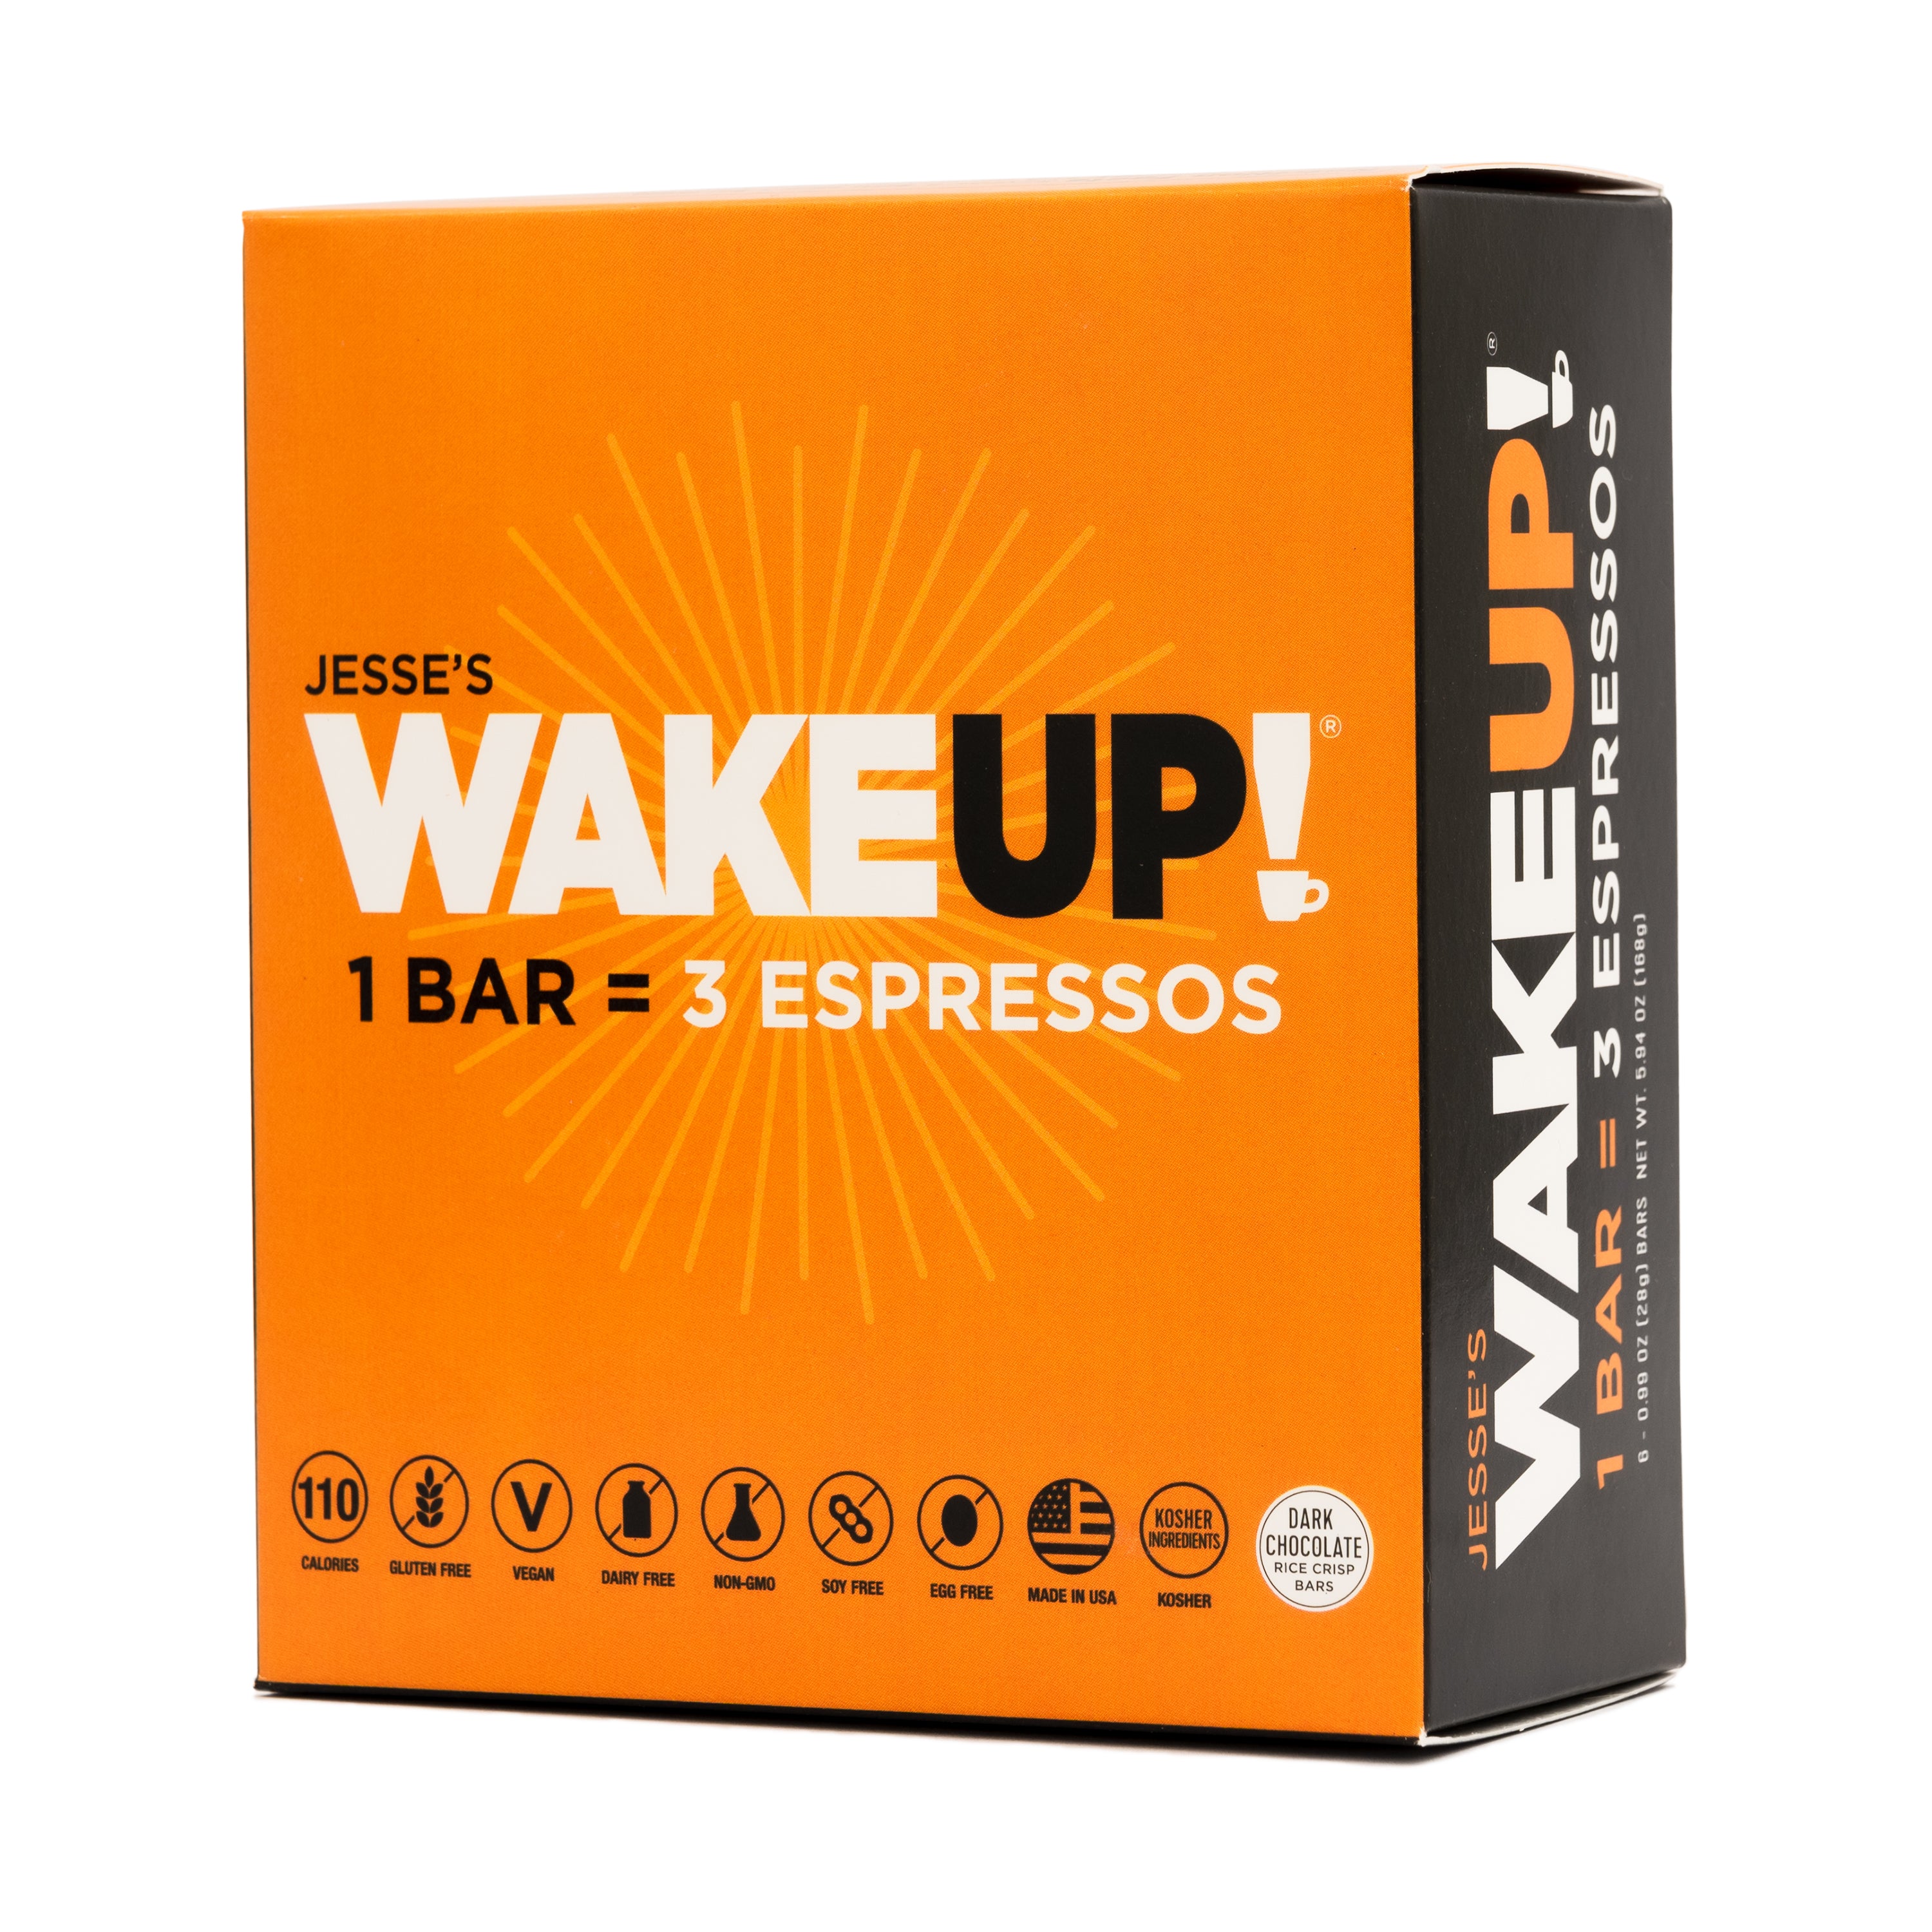 Jesse's WakeUP! 1 Bar = 3 Espressos (6 Pack)